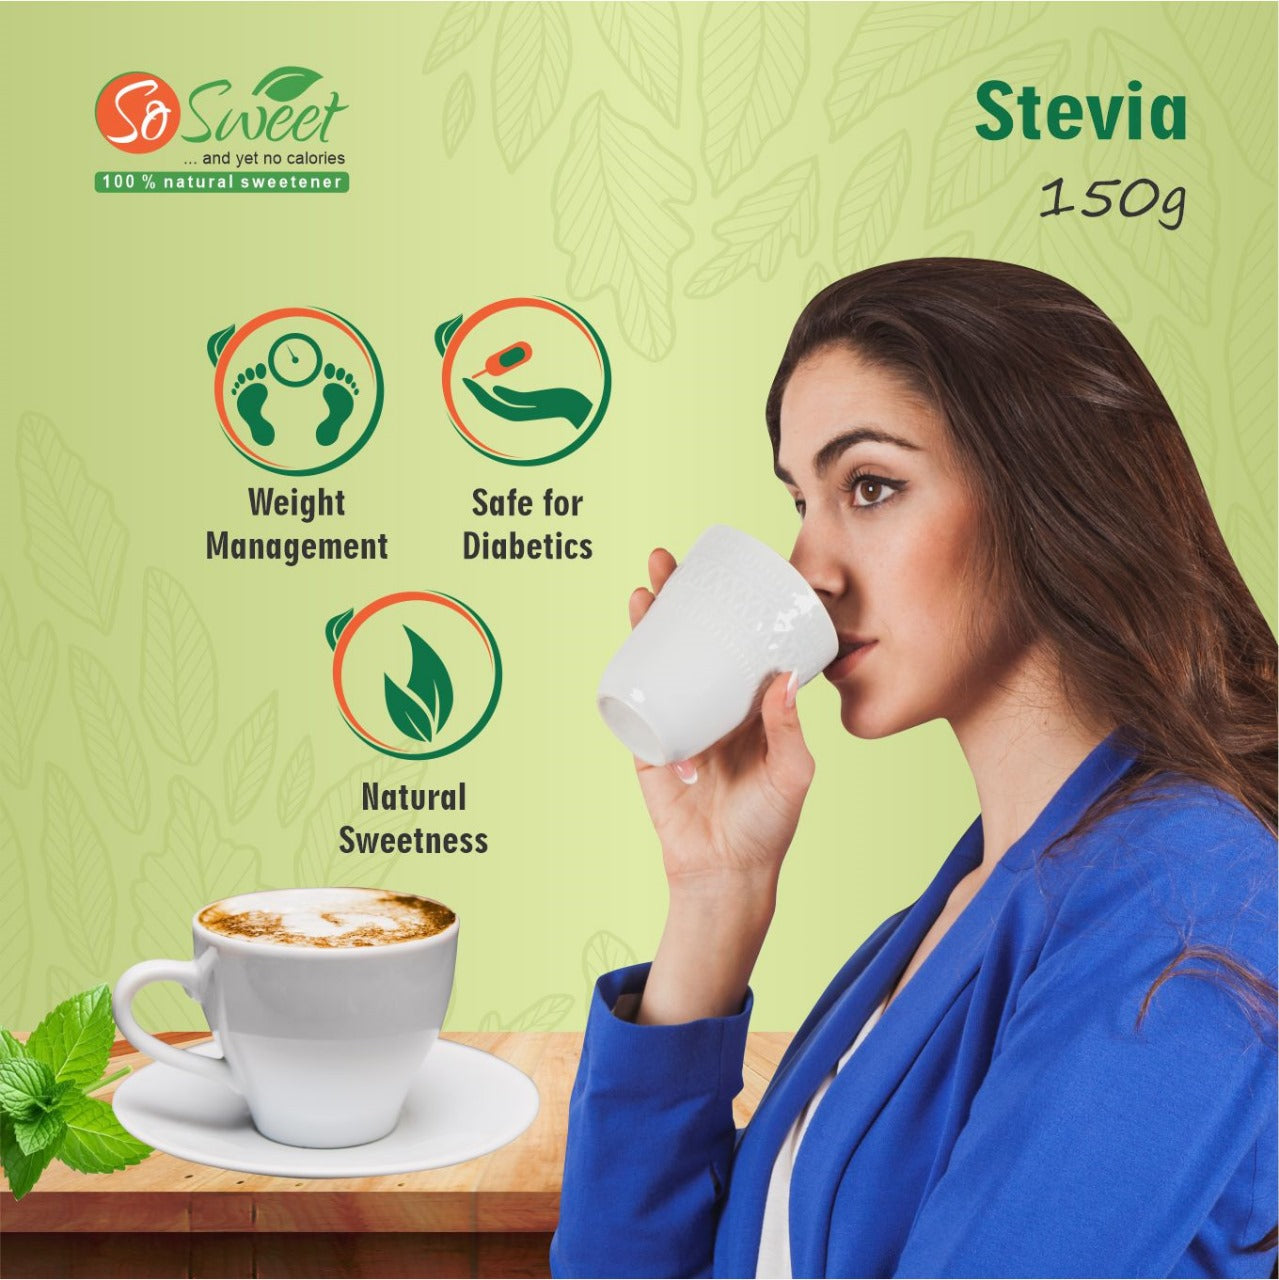 So Sweet Stevia Sugar Free100% Natural Sweetener 150gm | Low Calorie from Stevia | Taste Like Sugar & Safe for Diabetics-Pack of 2